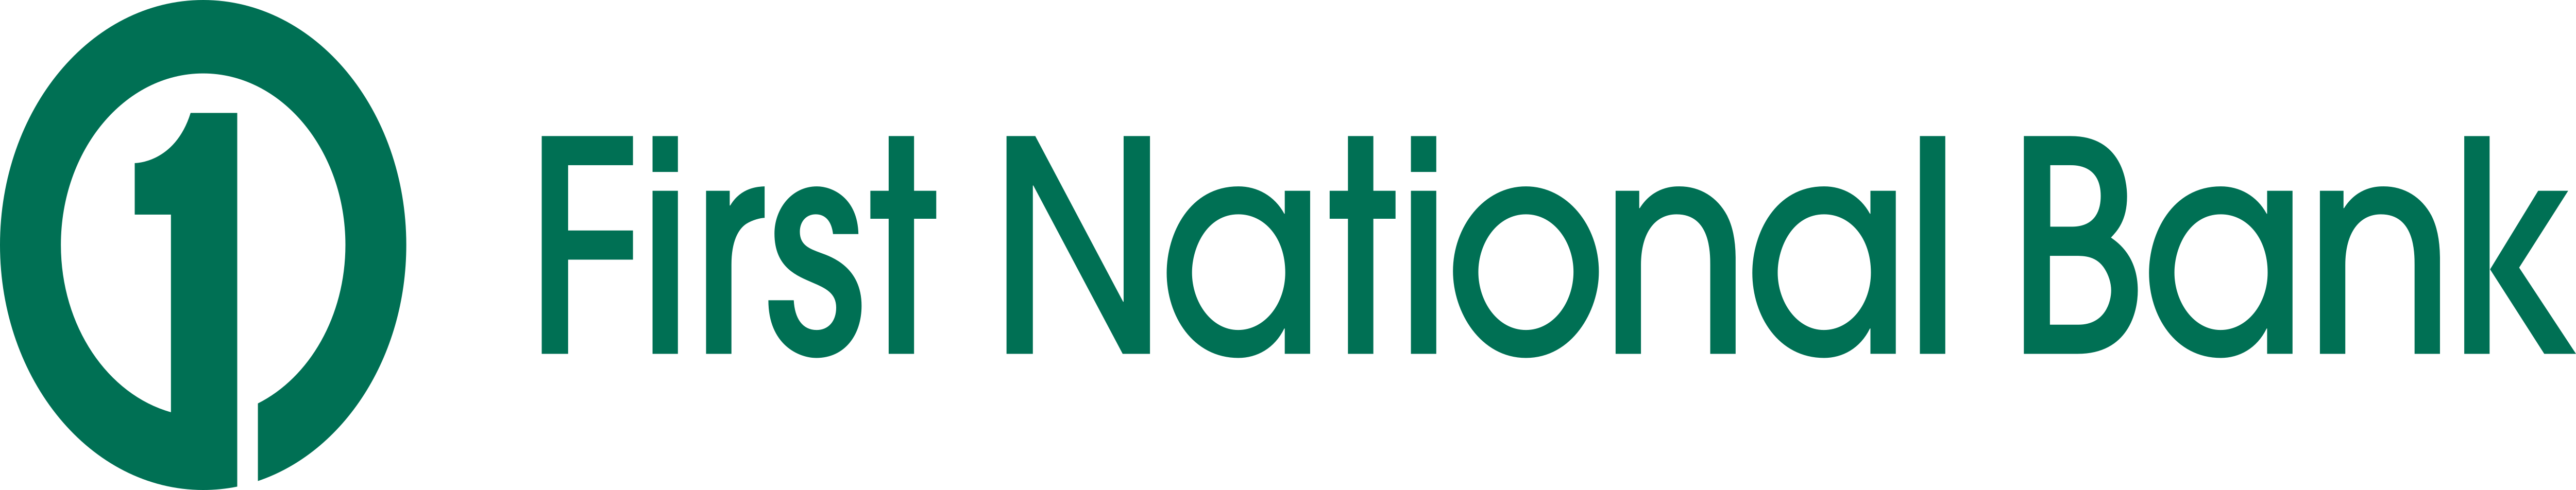 First National Bank – Logos Download